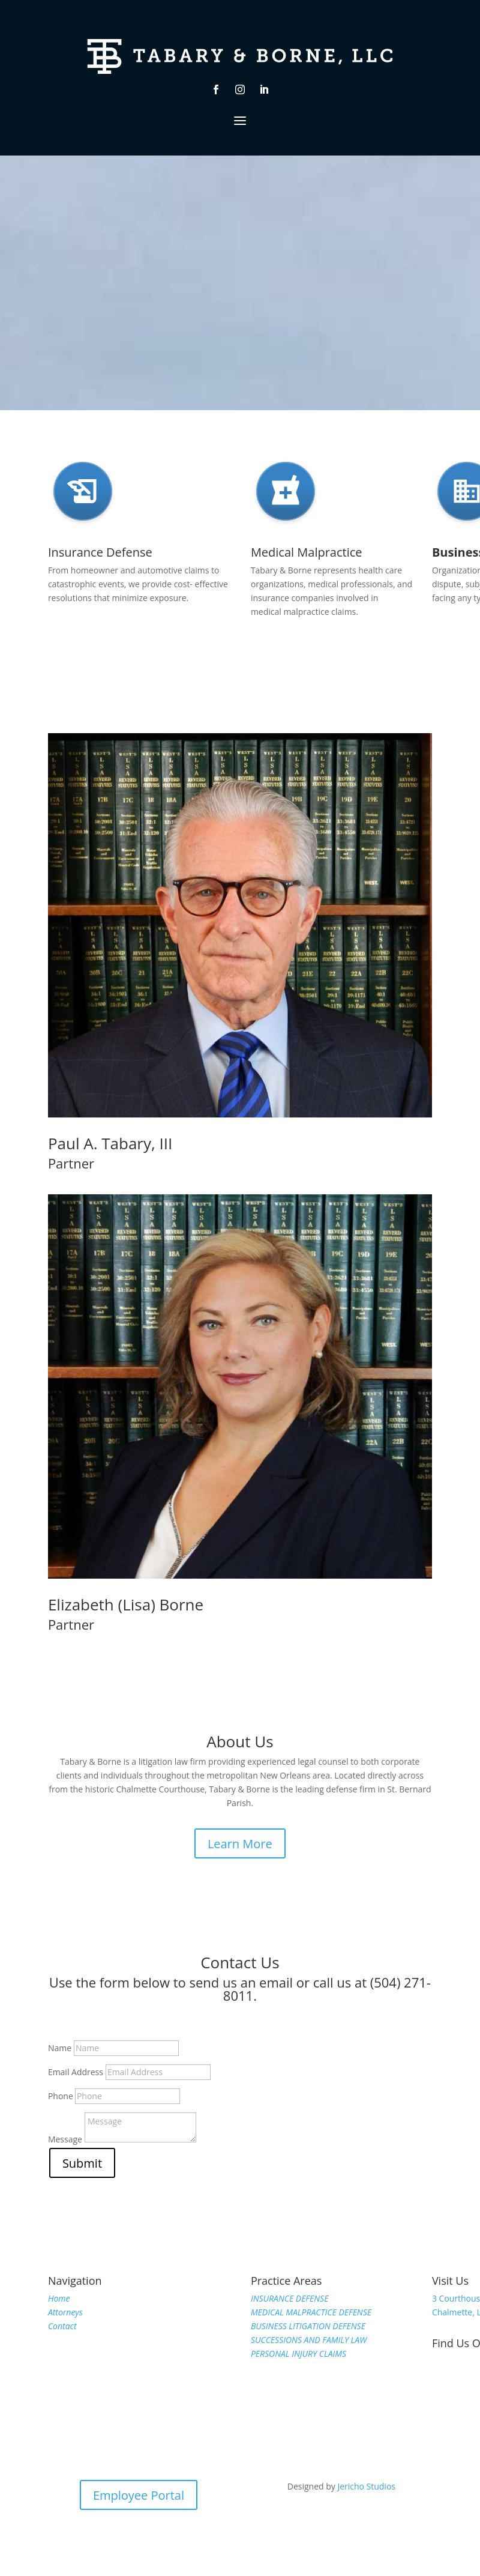 Tabary & Borne, L.L.C. - Chalmette LA Lawyers